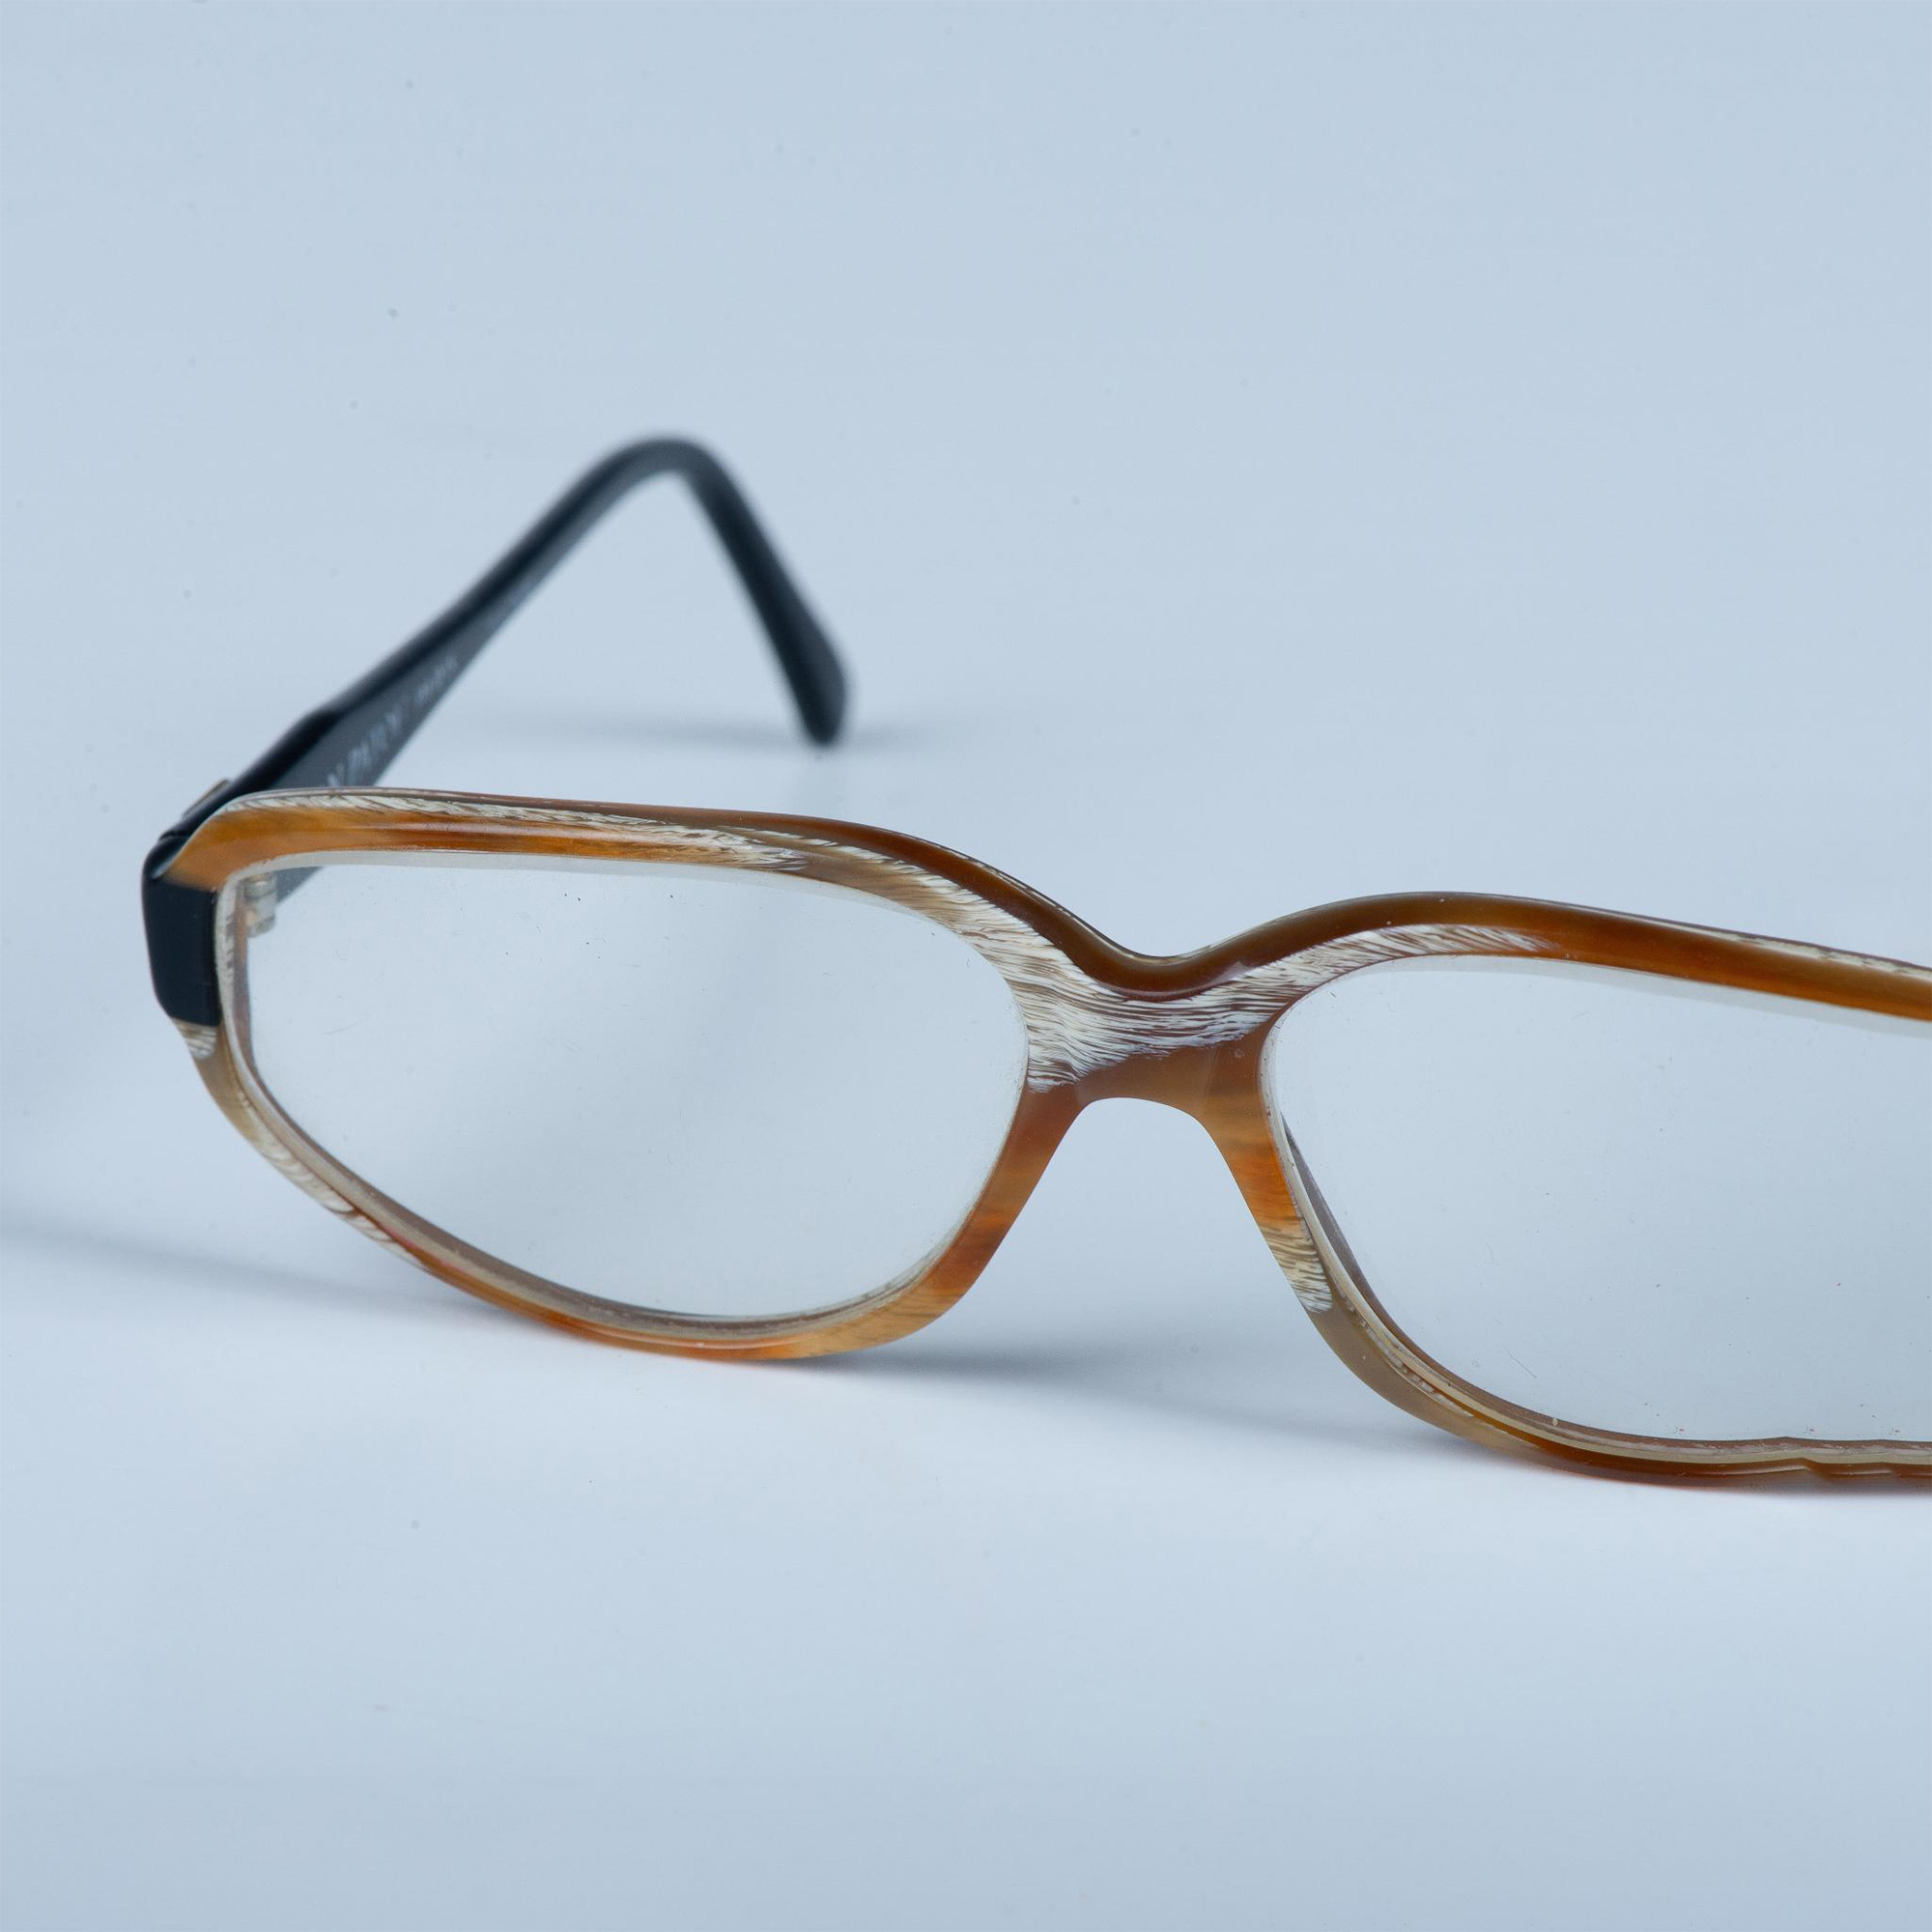 2pc Designer Eyeglass Frames - Image 8 of 11